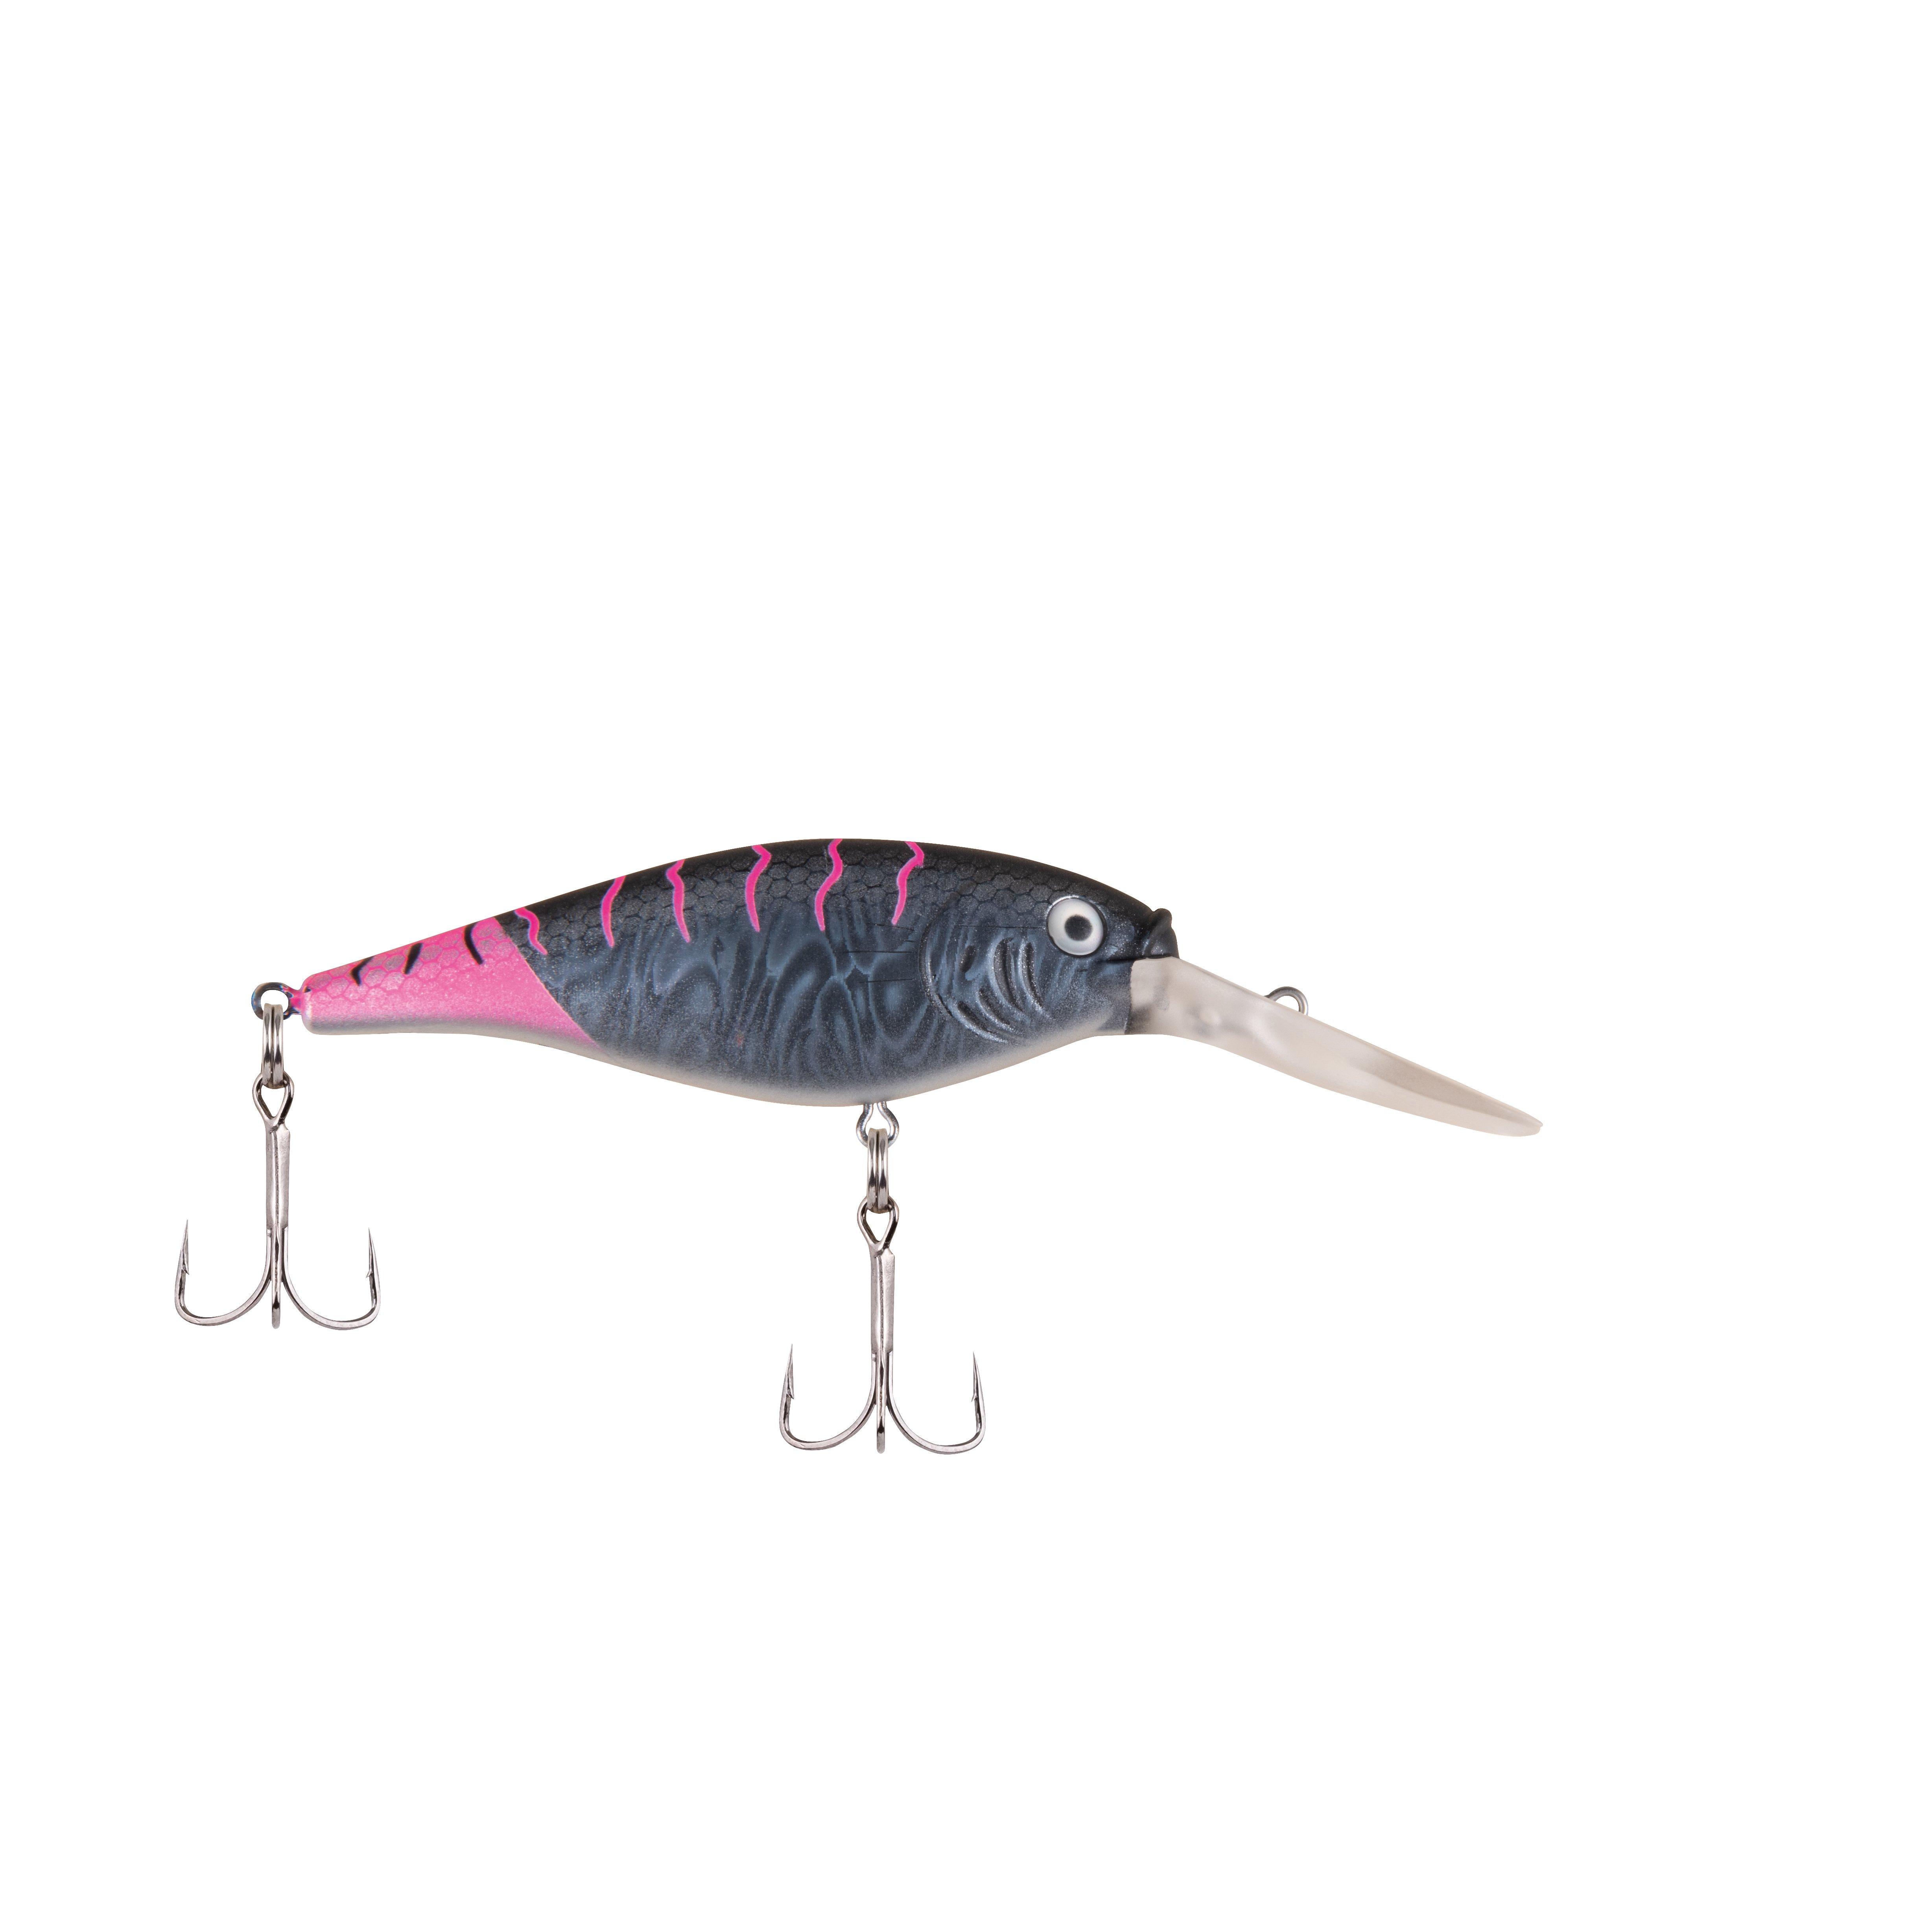 Berkley Flicker Minnow Fishing Lure, Firetail Red Tail, 1/2 oz